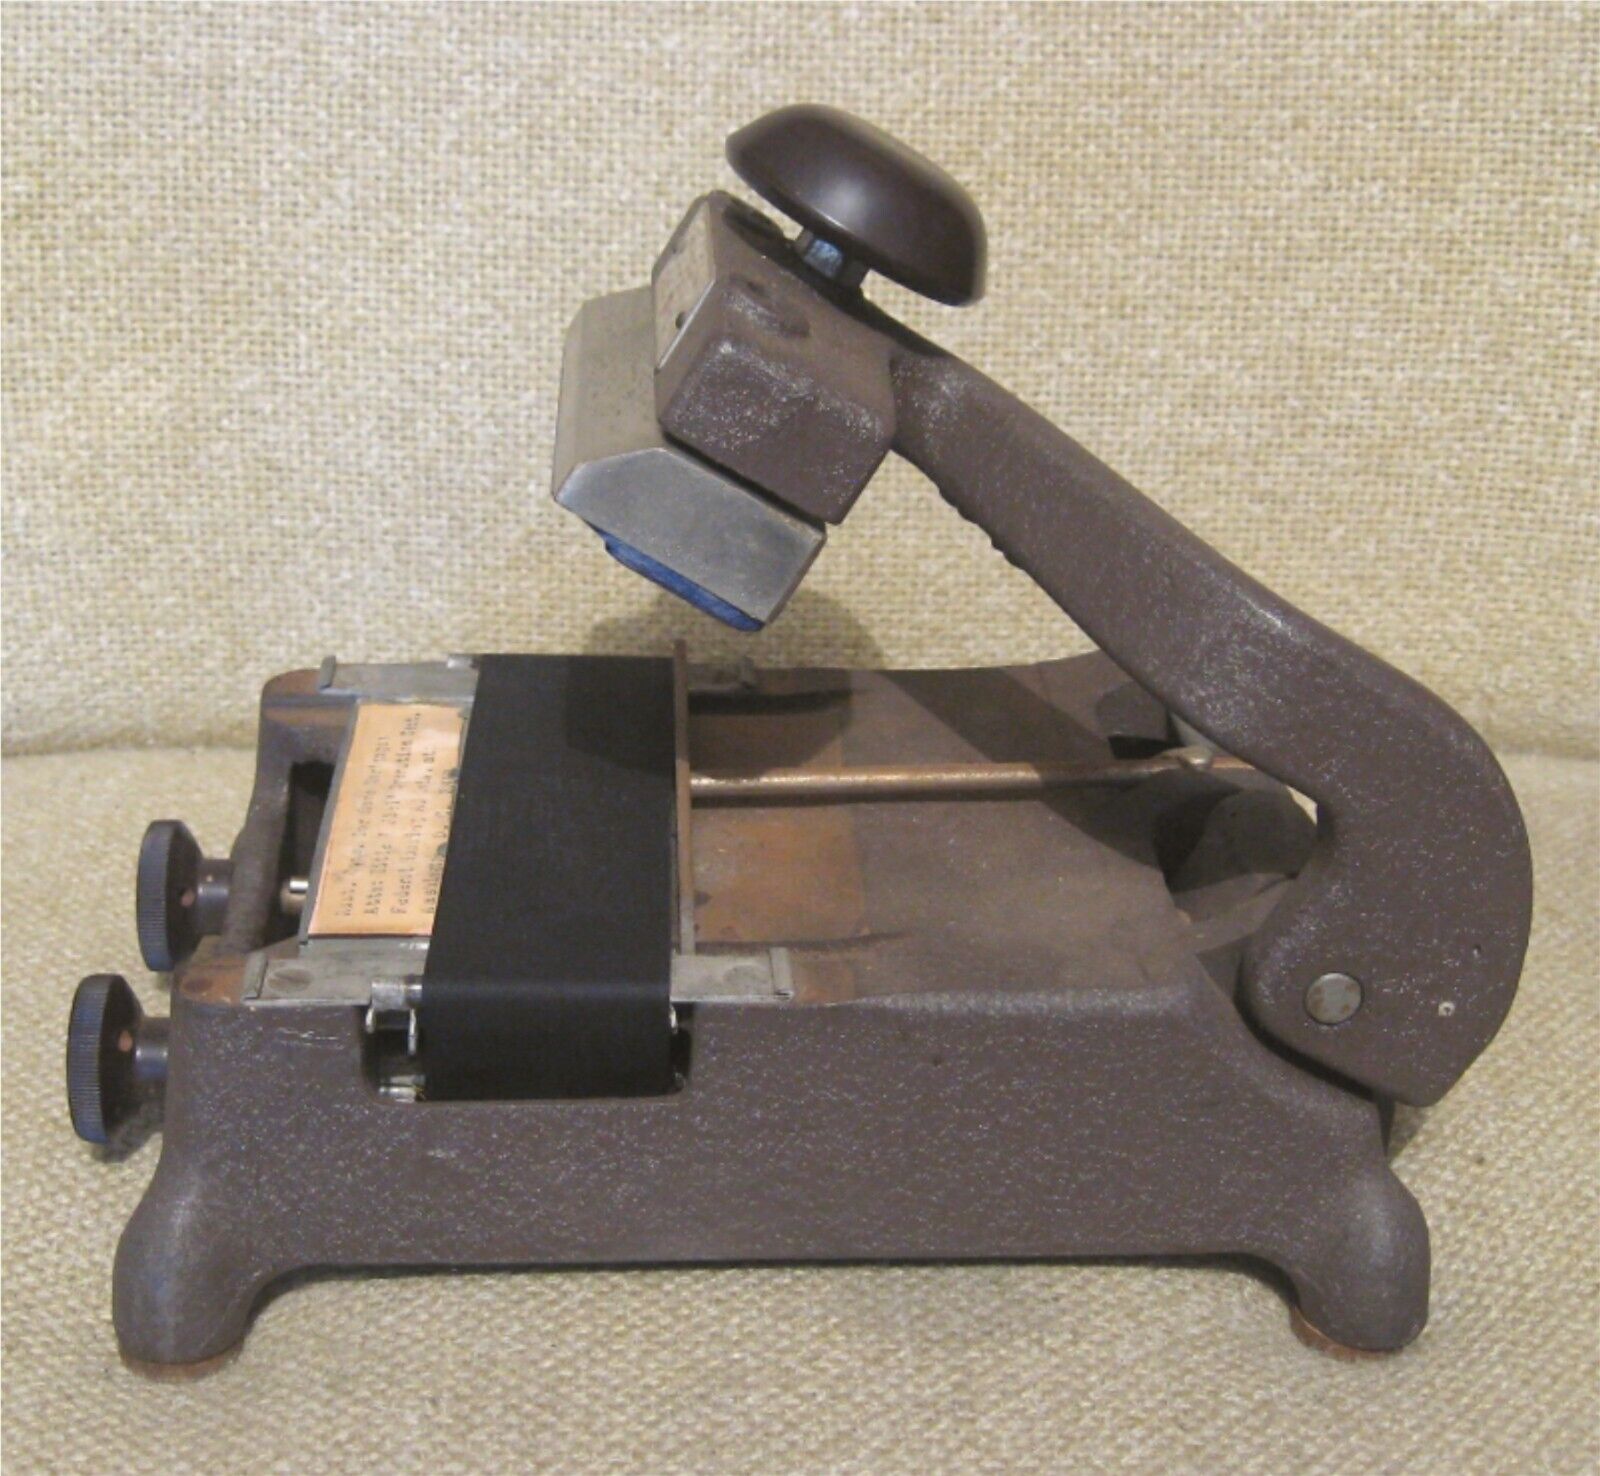 Vintage CLASS 500 ADDRESSOGRAPH - DESK INK RIBBON STAMP MACHINE with STAMP